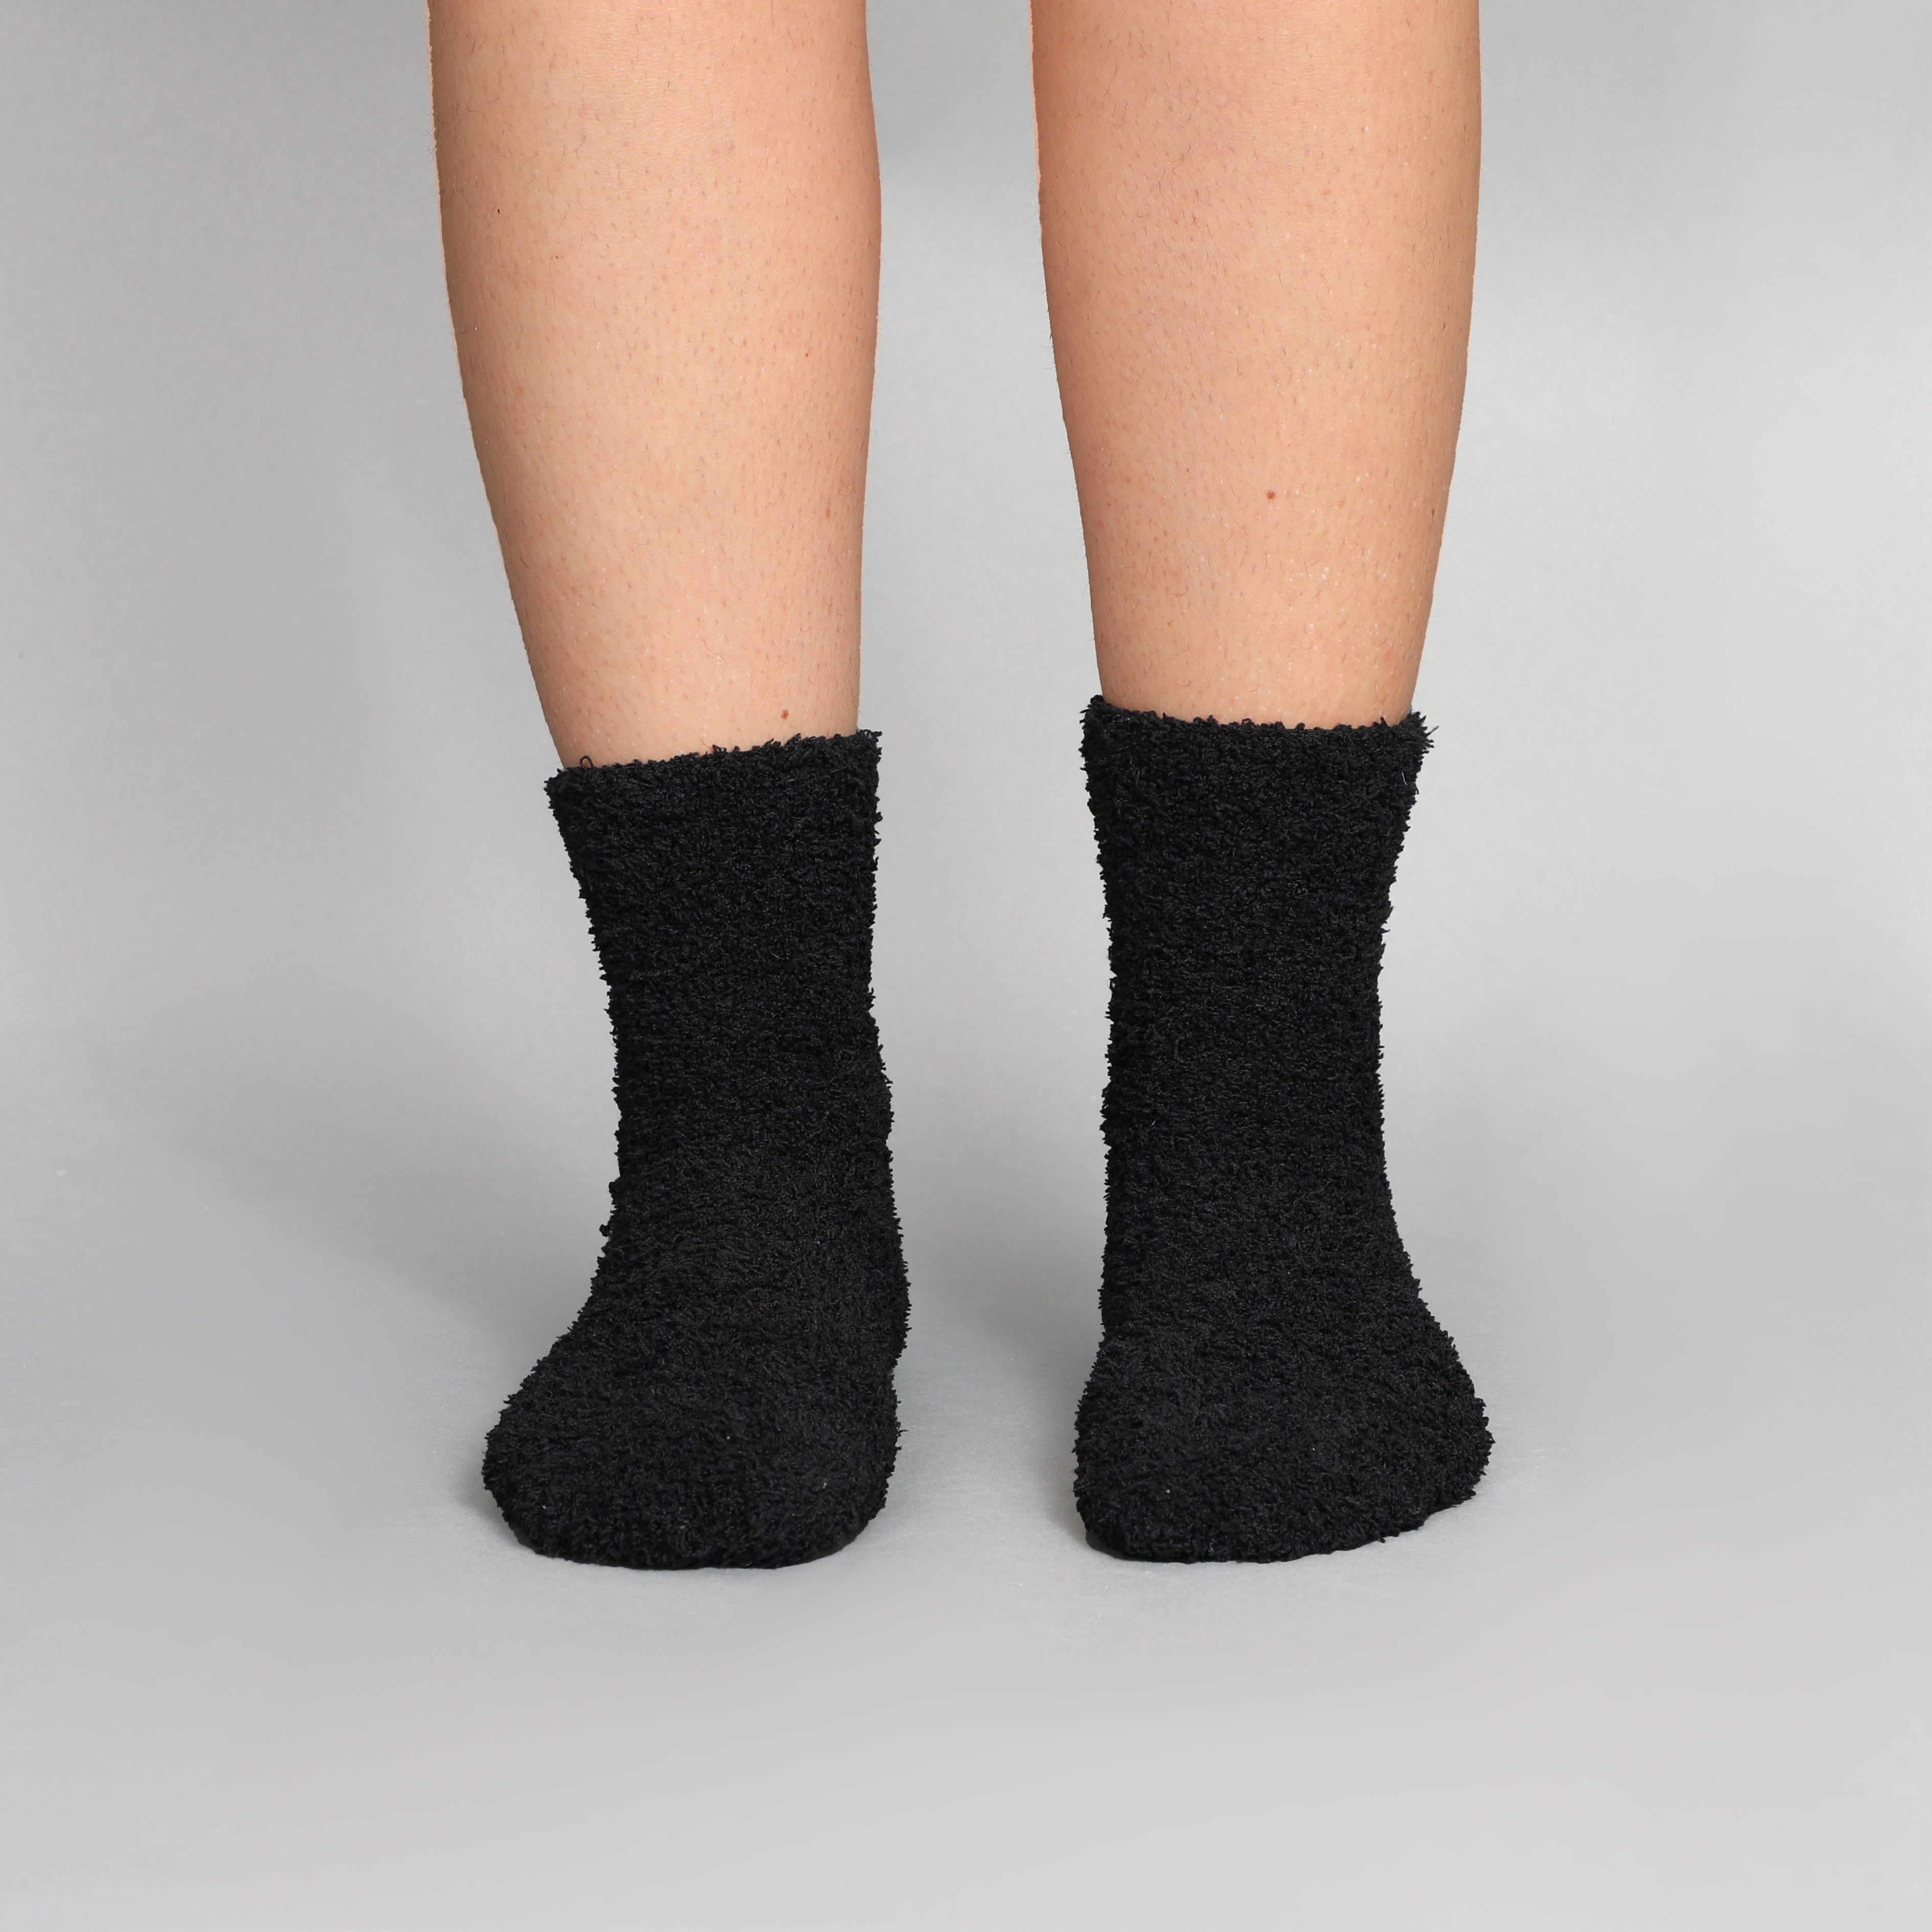 The Cozy Socks